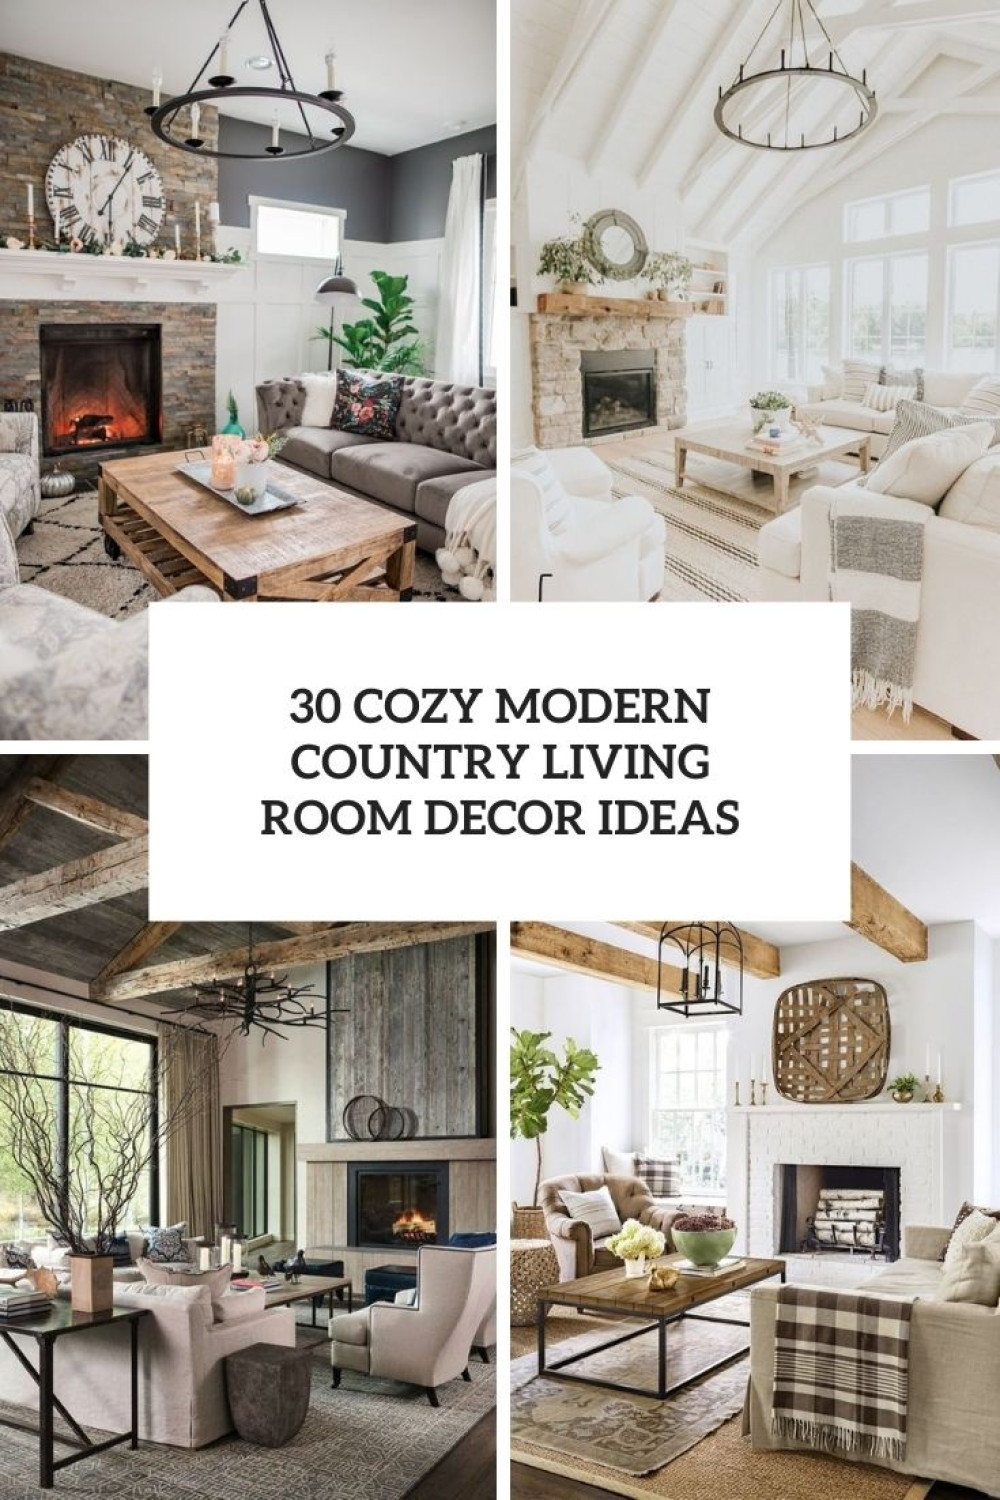 10 Charming Country Living Room Decorating Ideas – Joseph Bosco ...